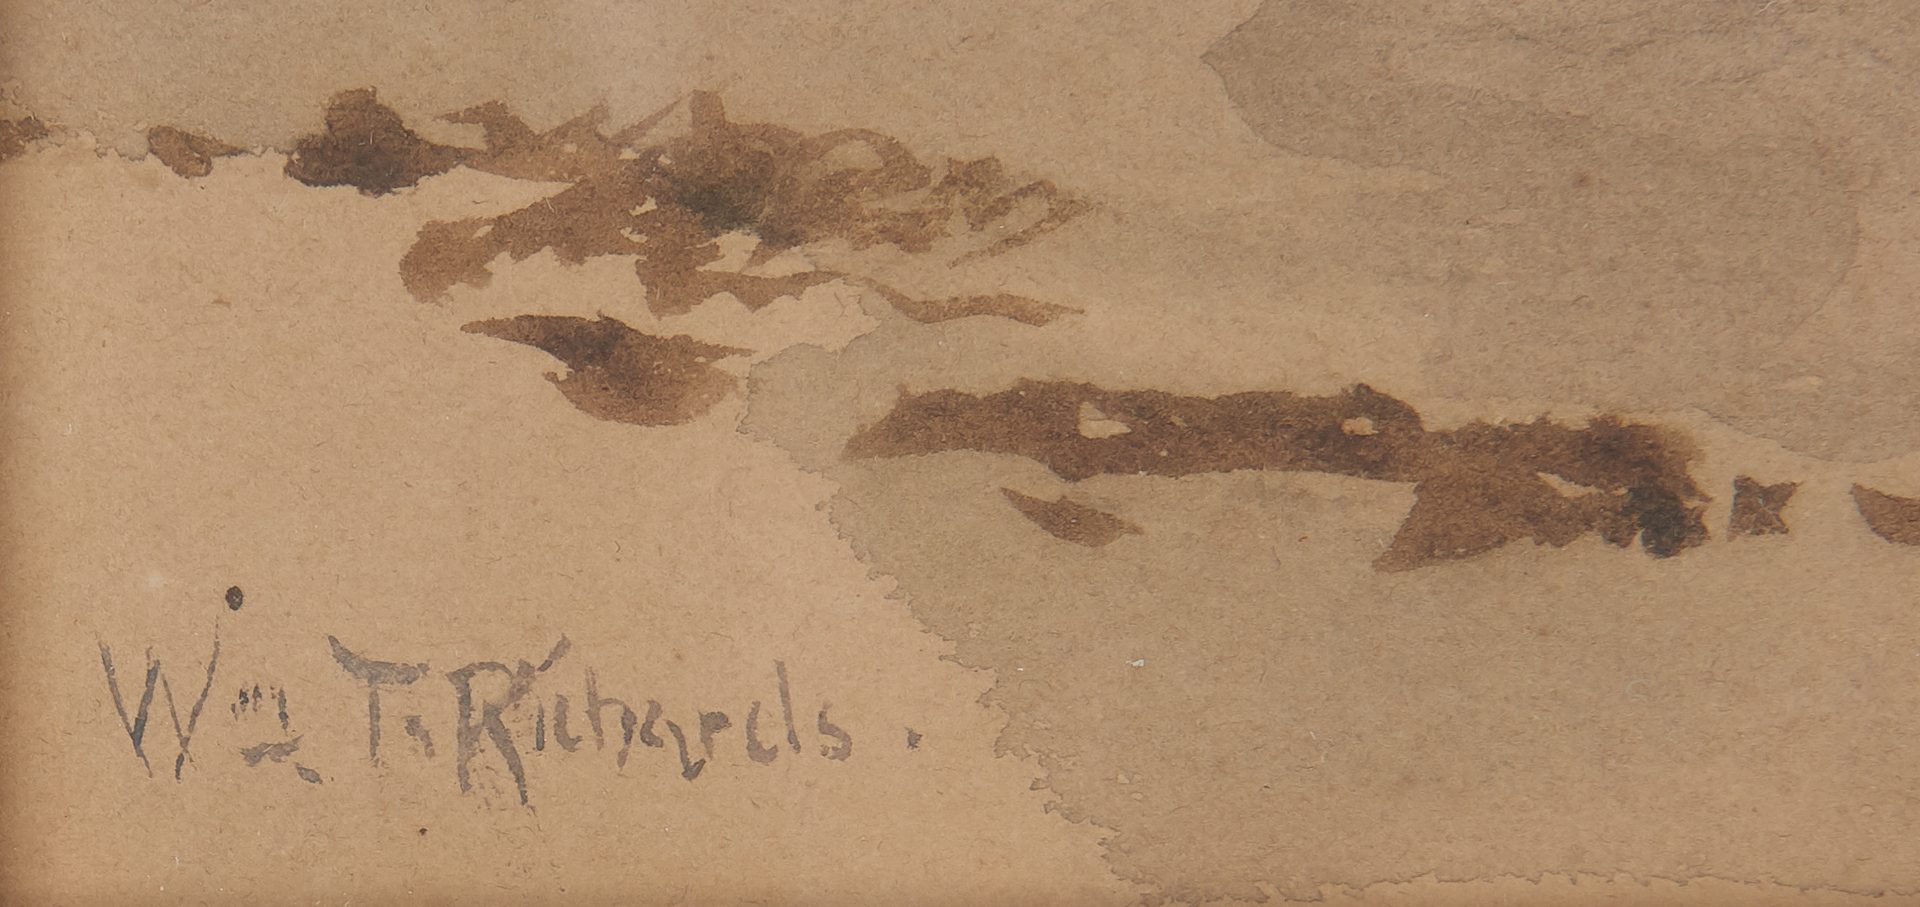 Lot 103: William Trost Richards Watercolor, Naragansett Bay